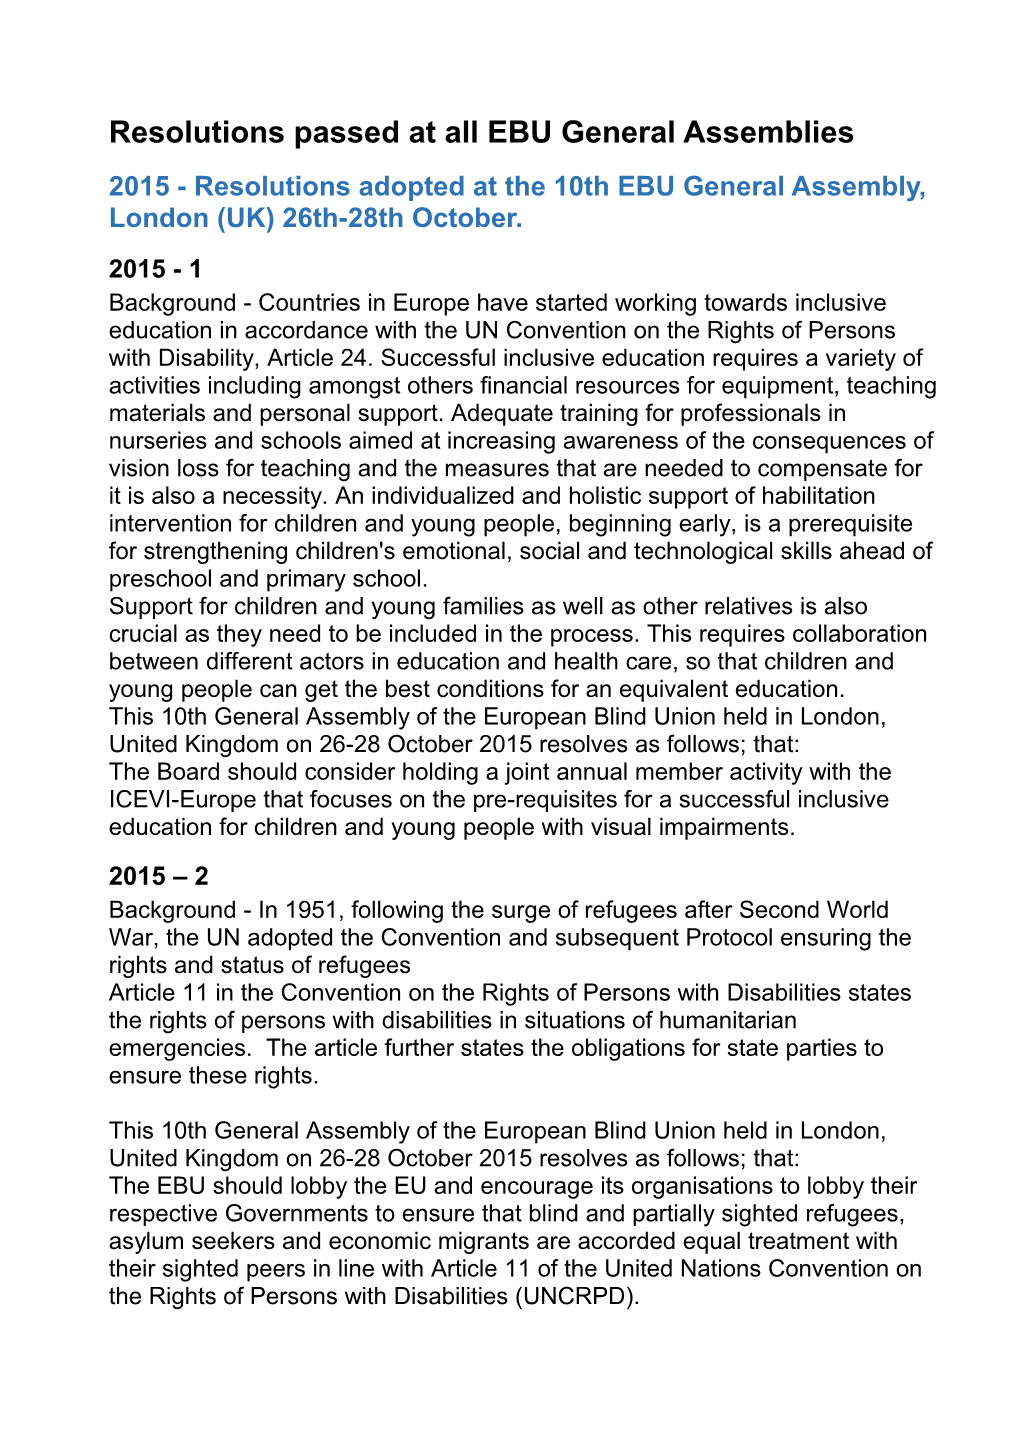 Resolutions Passed at All EBU General Assemblies